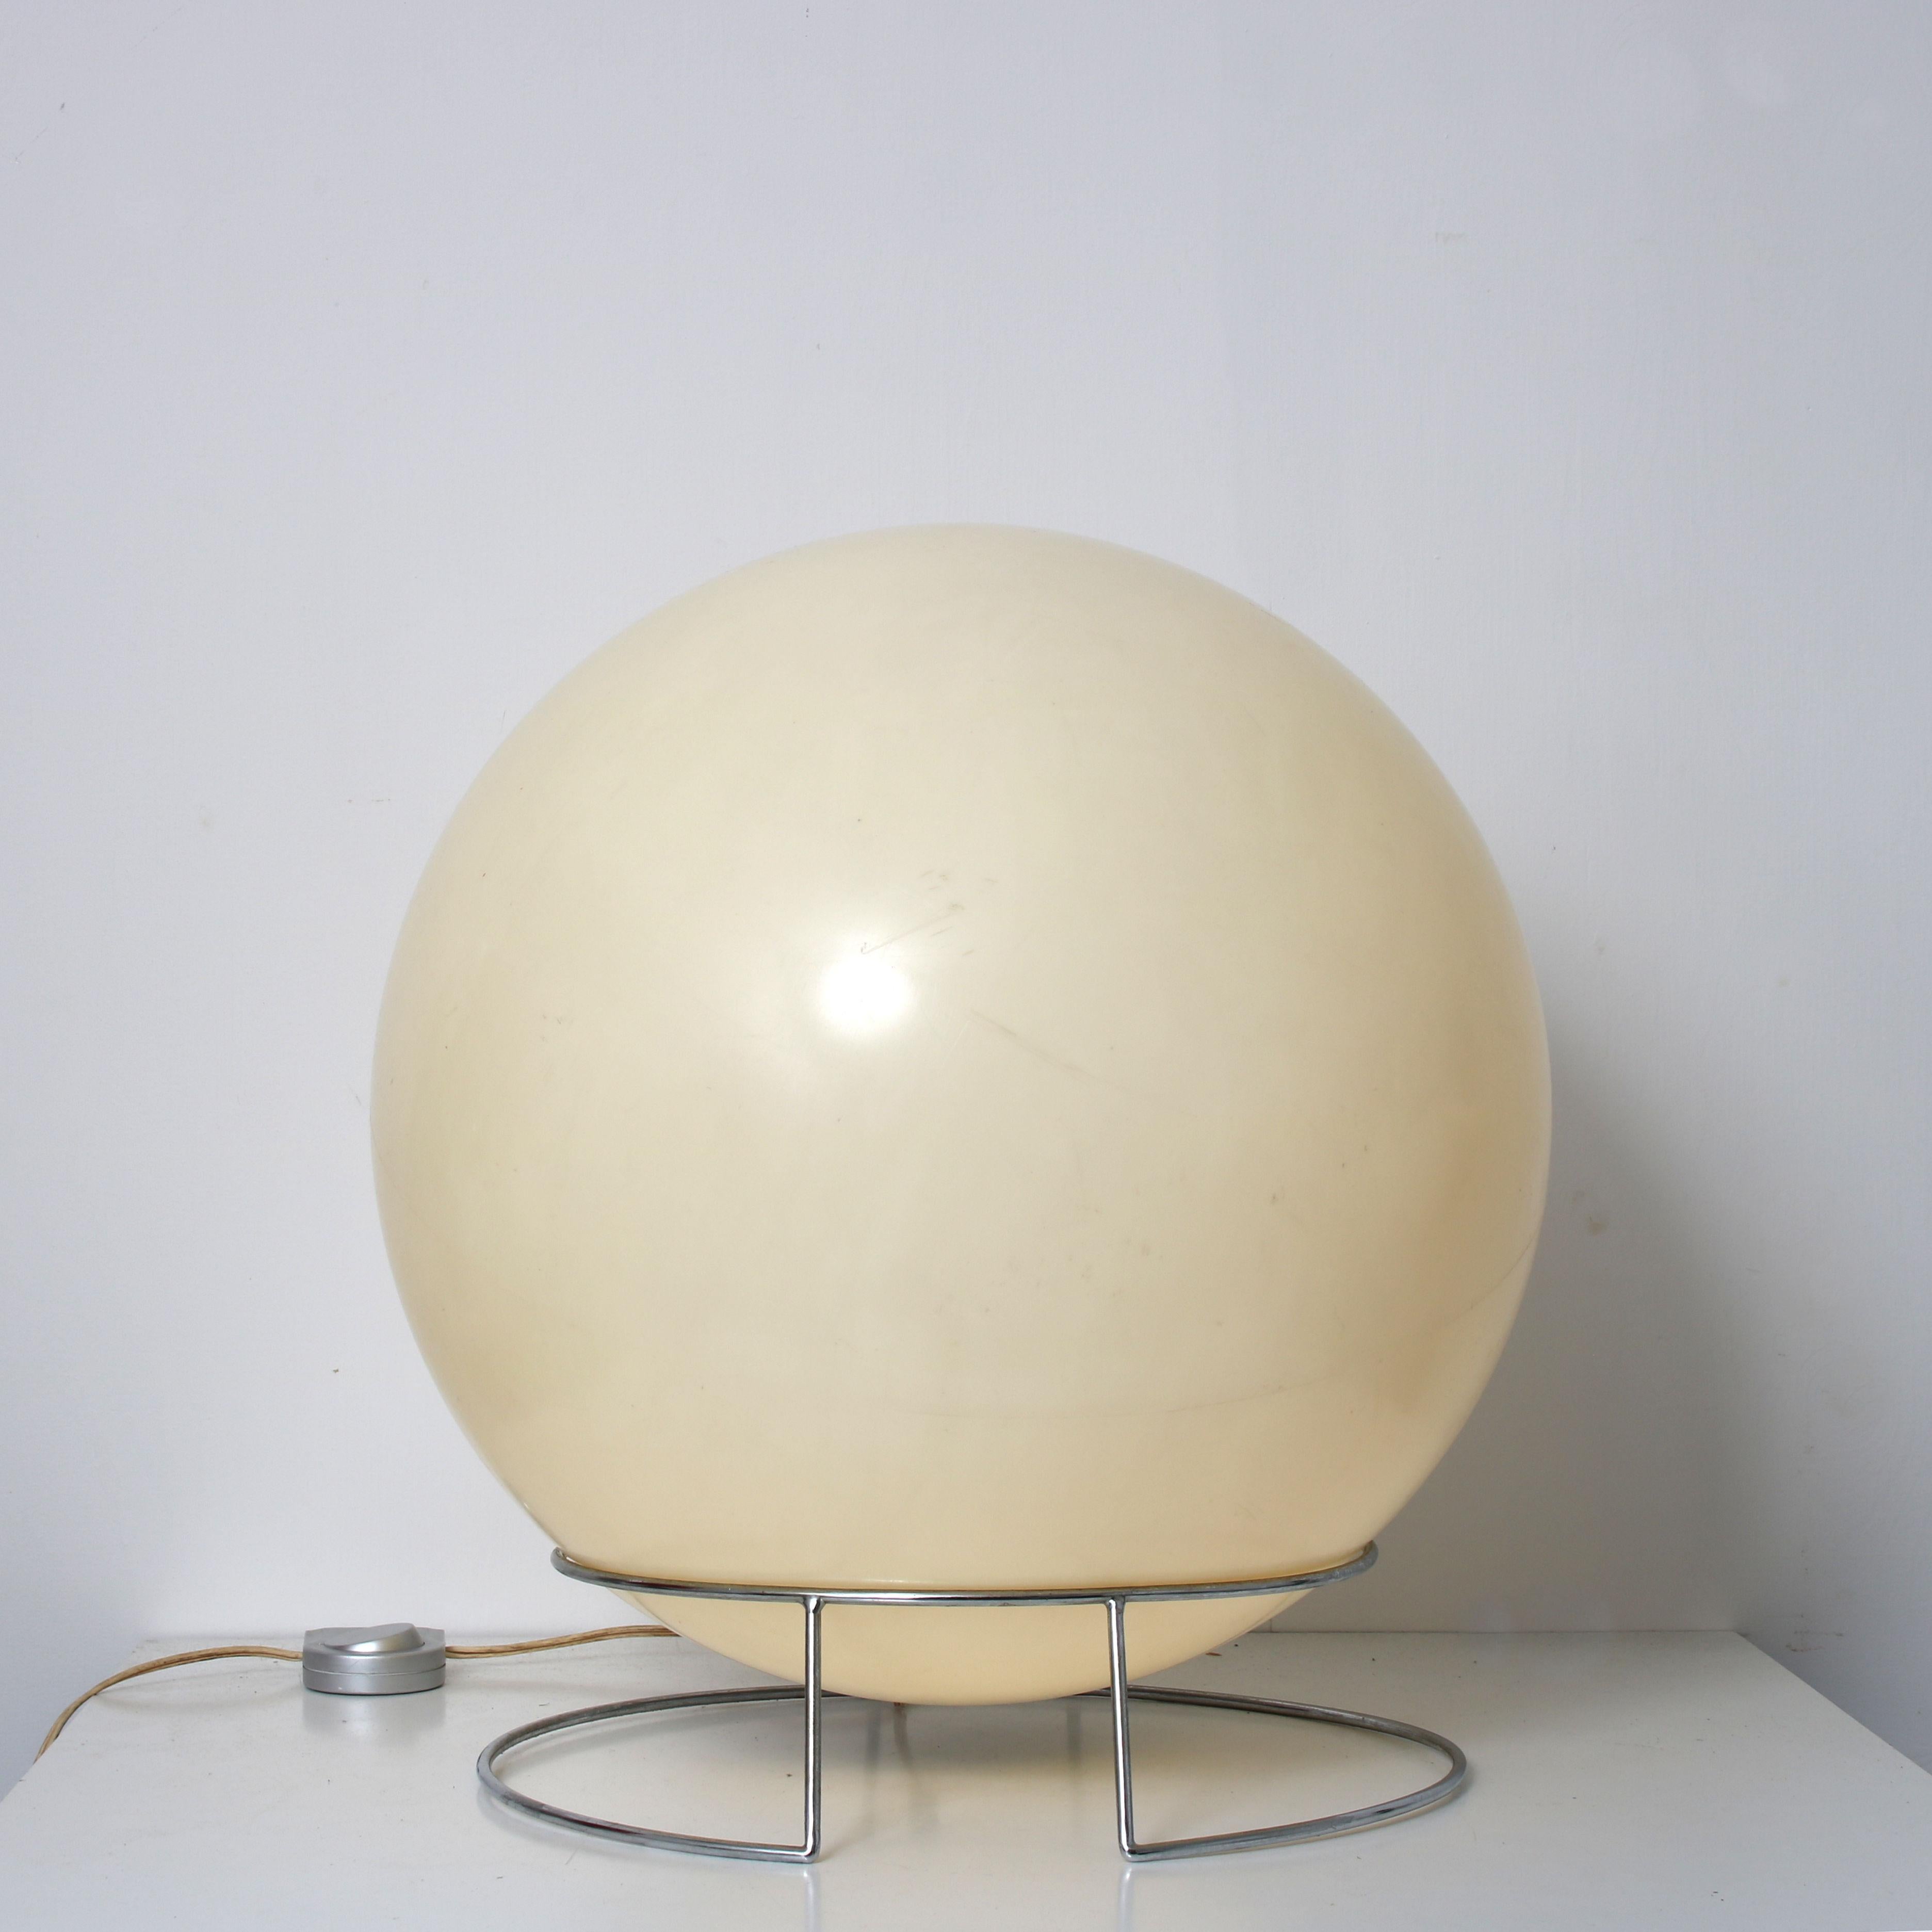 Late 20th Century “Saturnus” Floor / Table Lamp by Raak, Netherlands 1970 For Sale